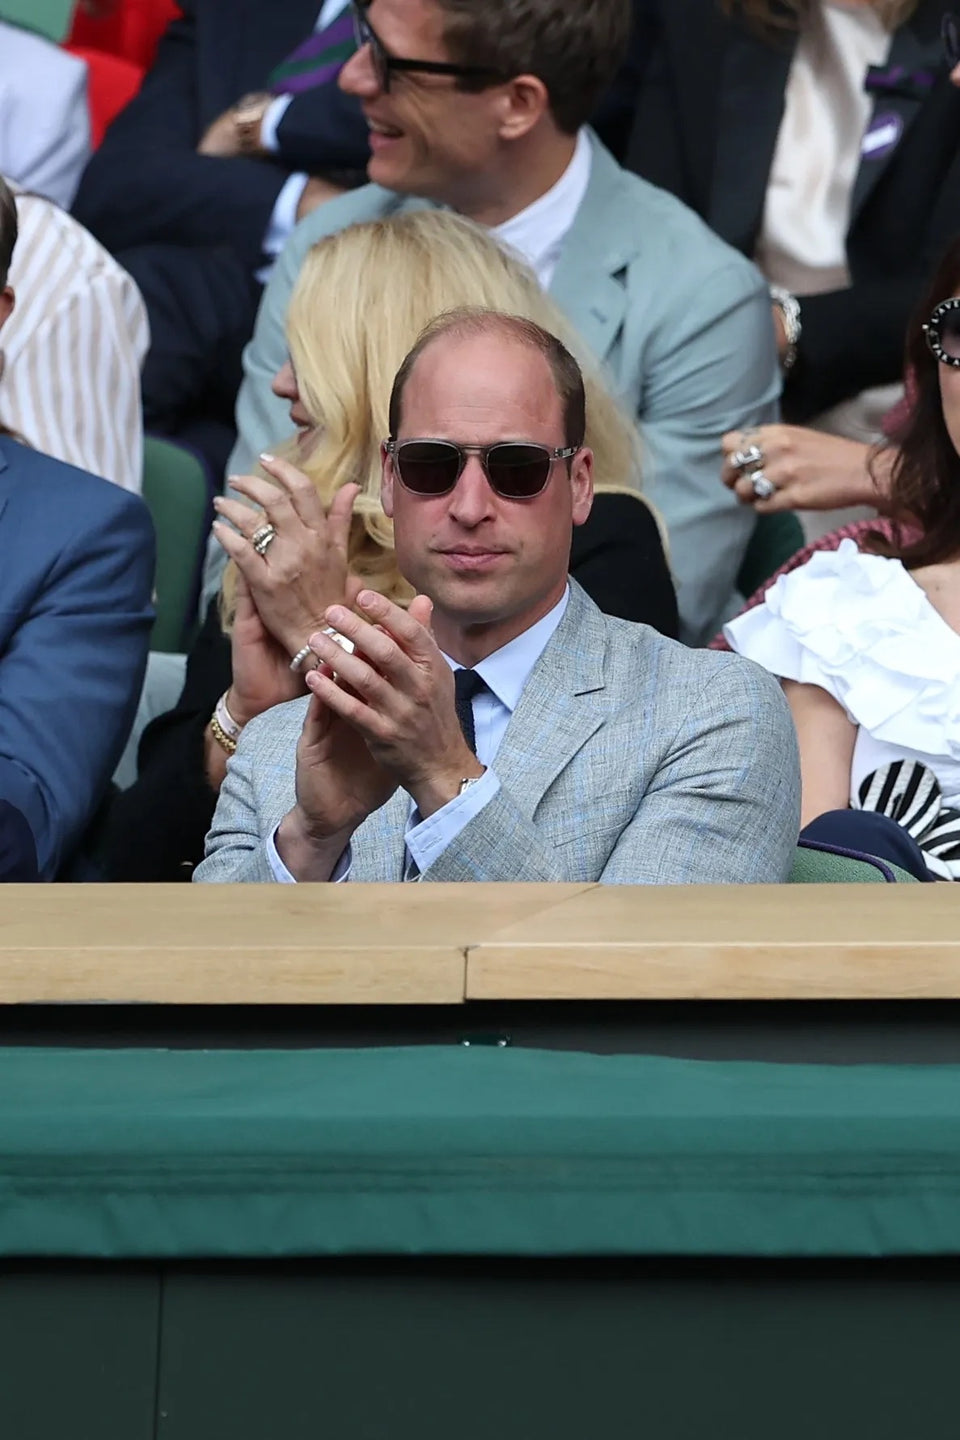 Prince William wearing Marshall Sunglasses